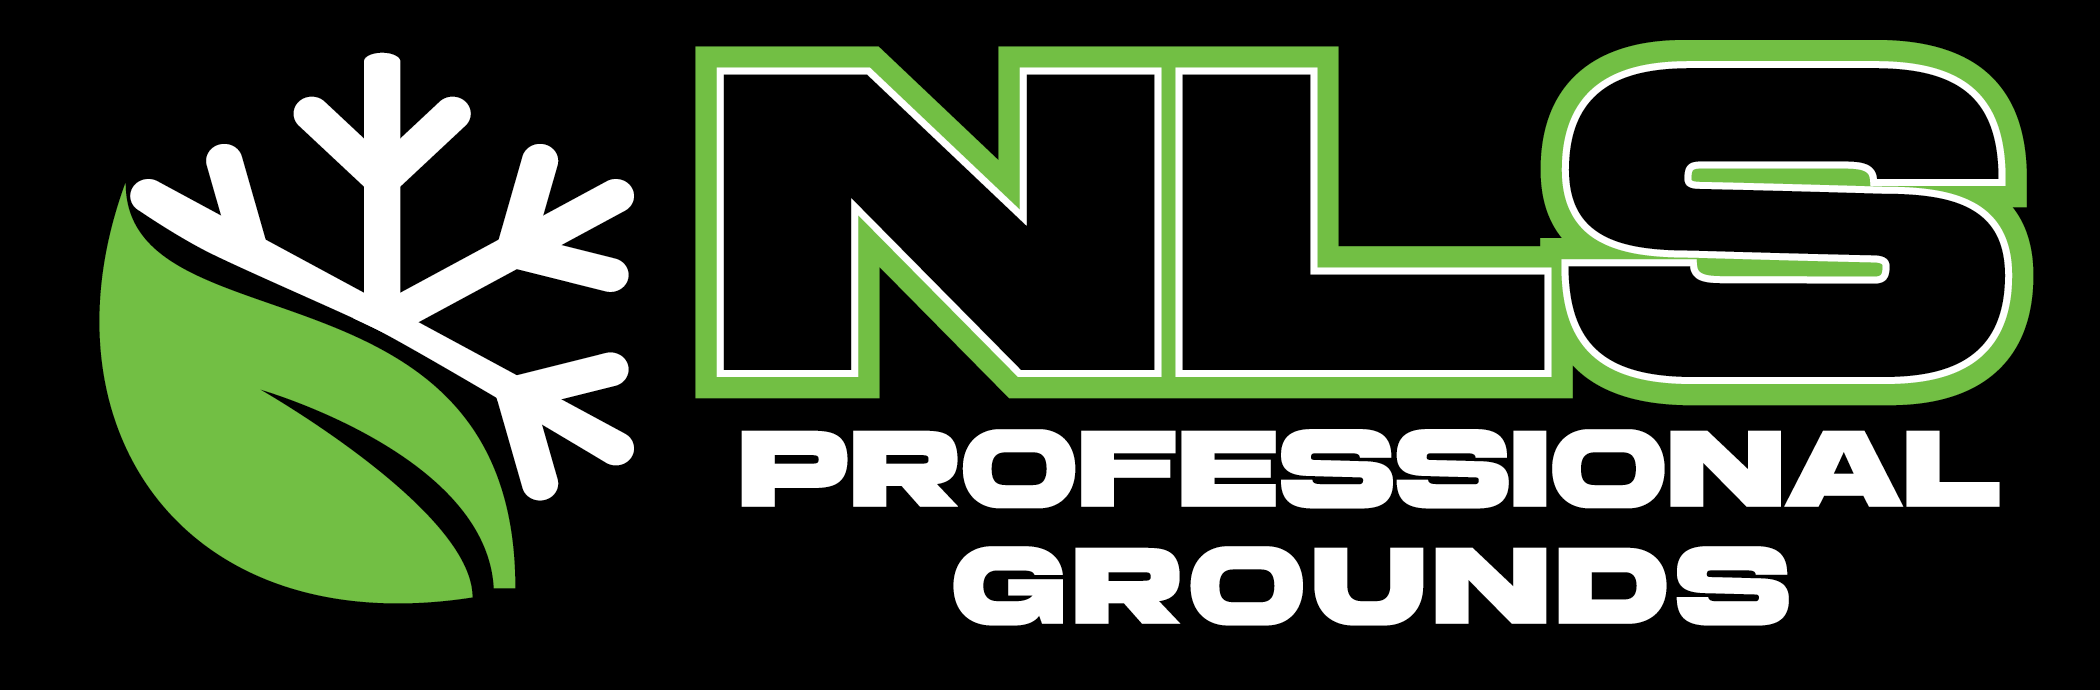 NLS Professional Grounds logo black